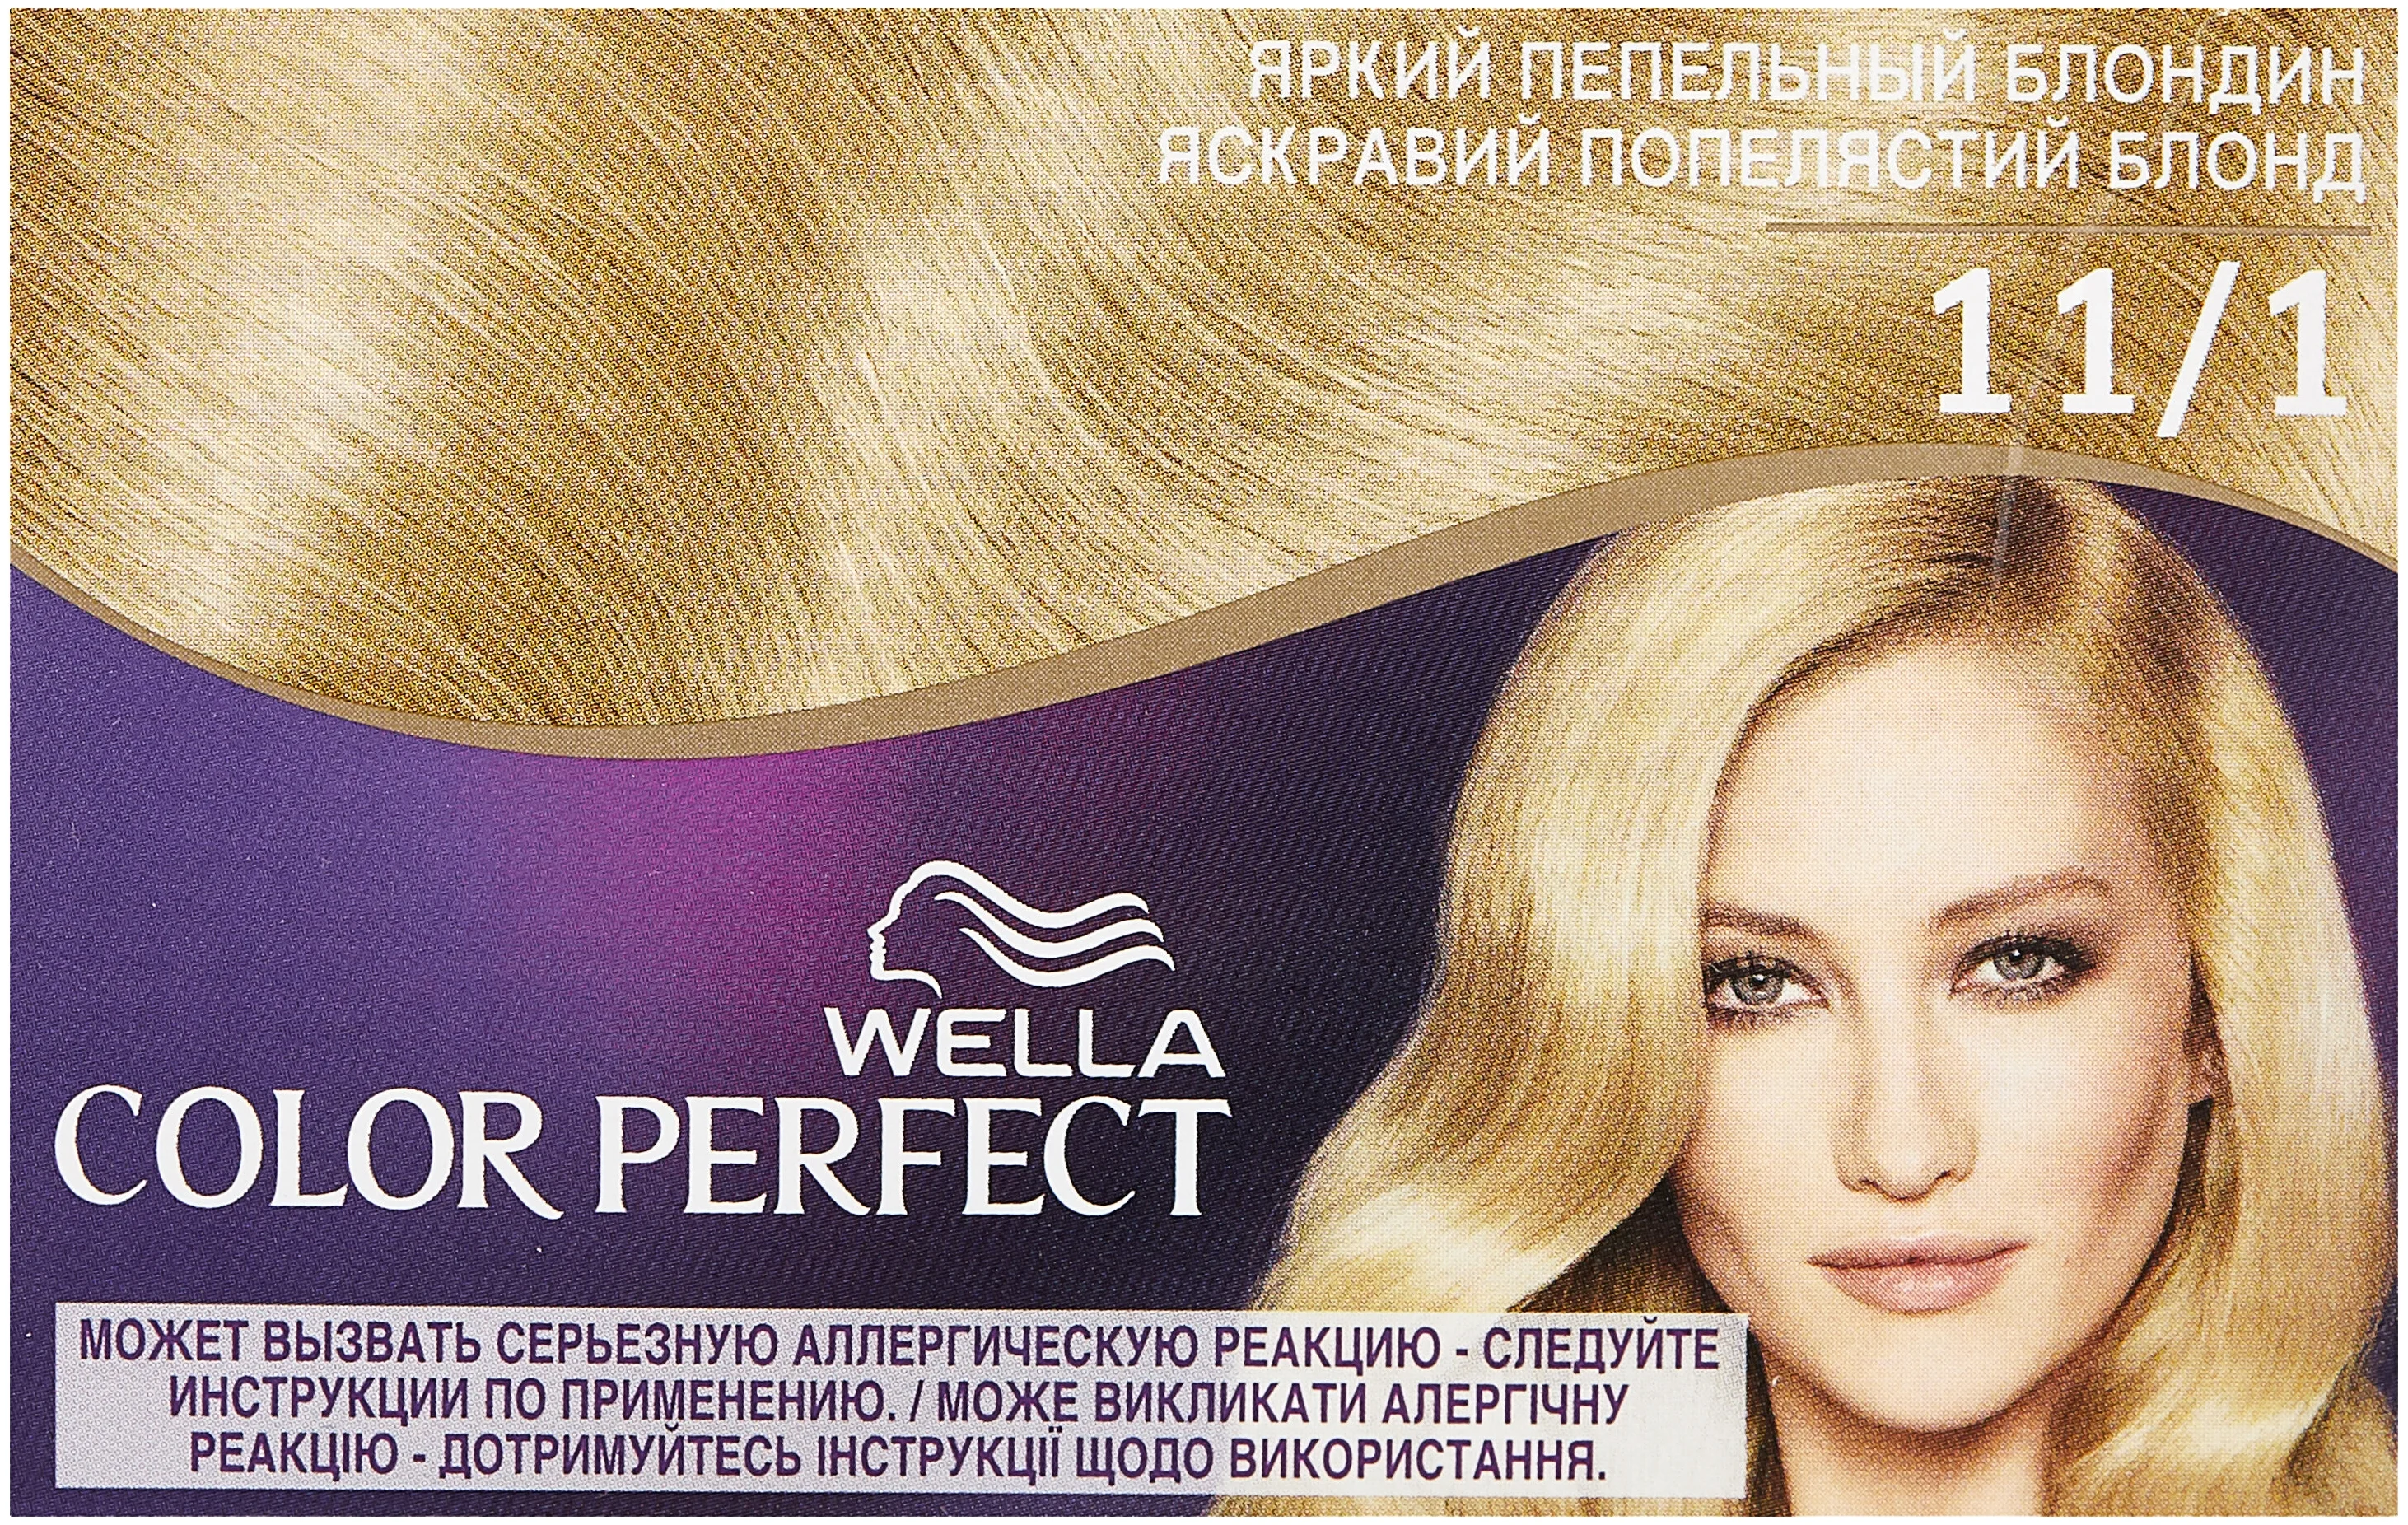 Wella Color Perfect, 50 мл - активный ингредиент: кератин